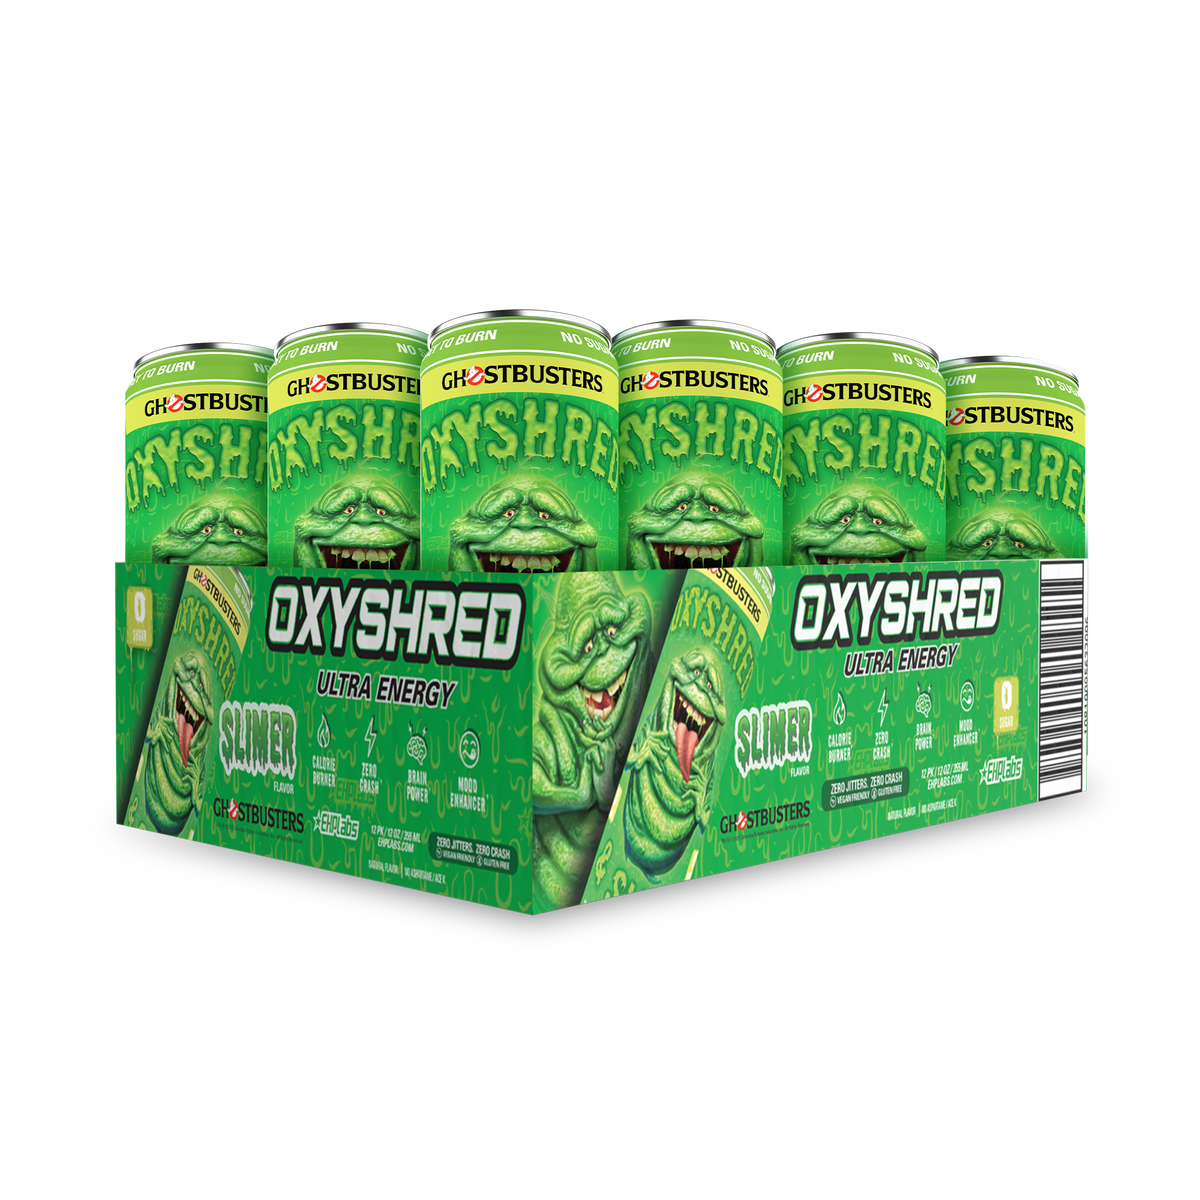 Oxyshred Ultra Energy